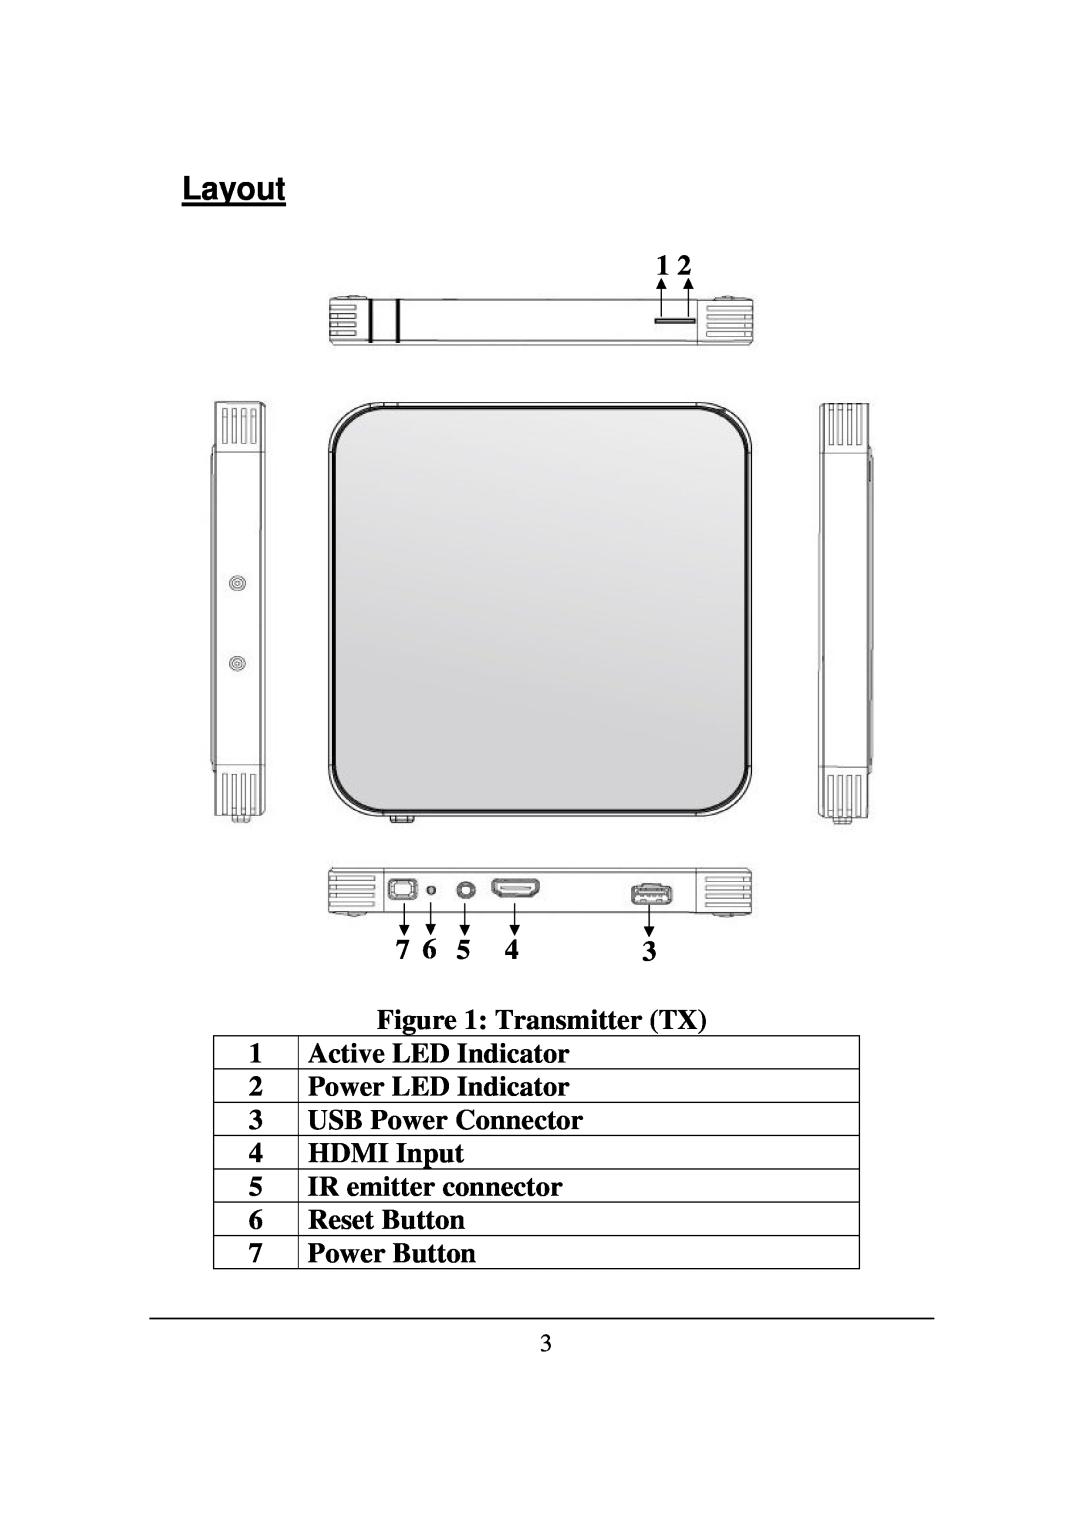 SIIG 671-121 manual Layout, Transmitter TX, Active LED Indicator, Power LED Indicator, USB Power Connector, HDMI Input 